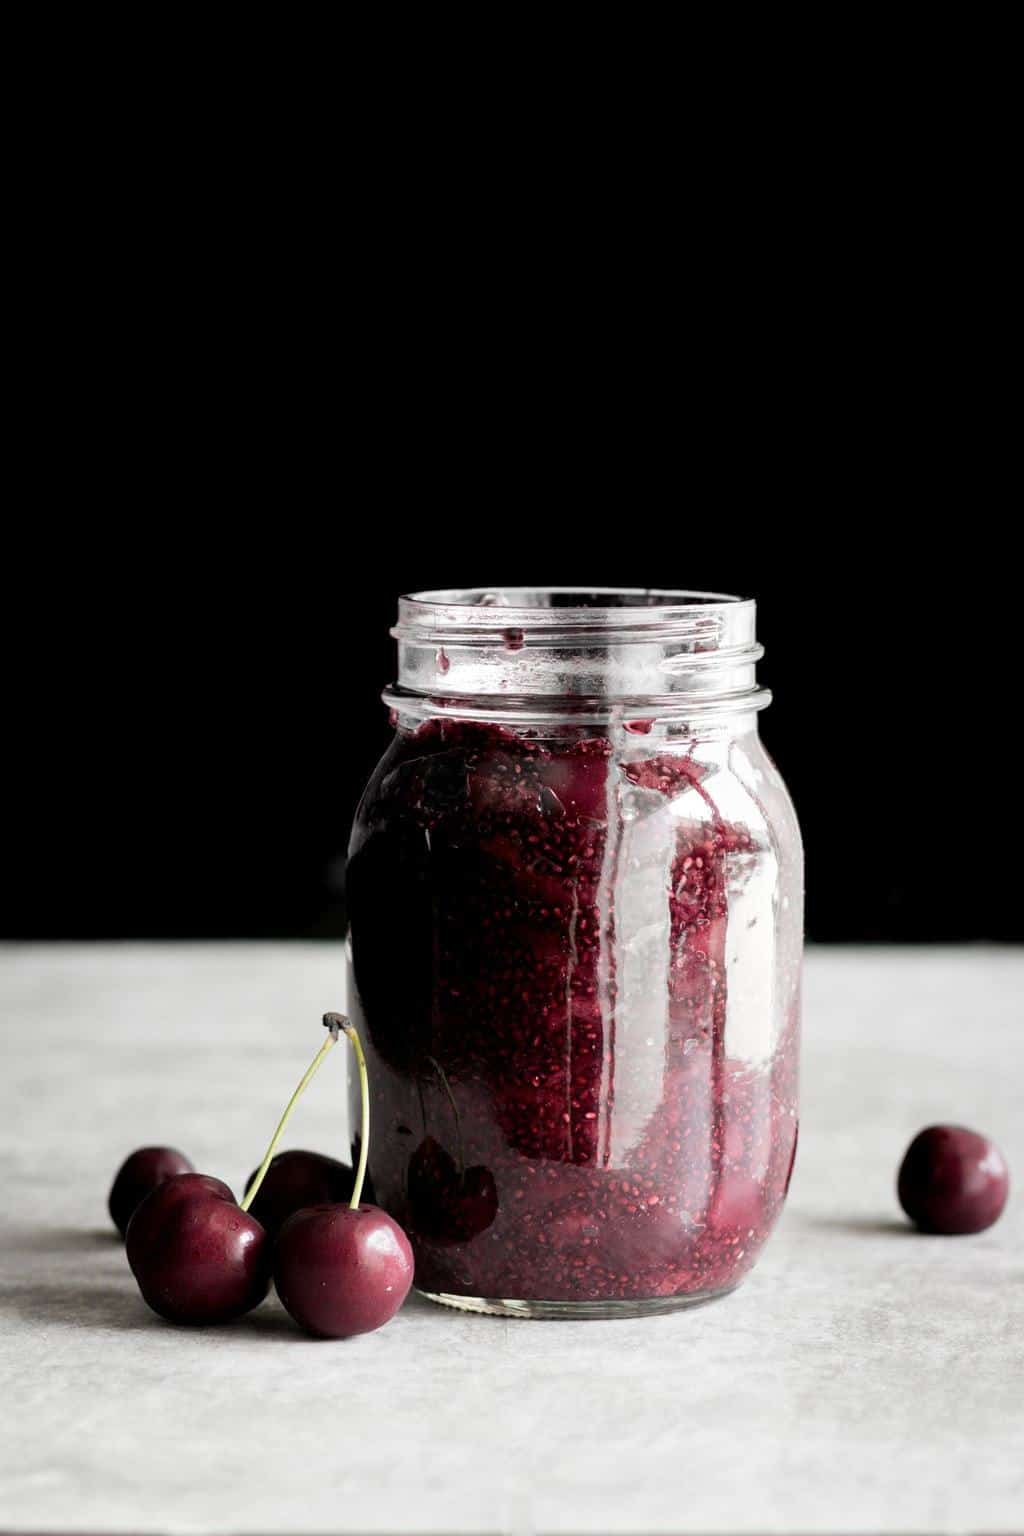 Cherry Chia Jam in a jar